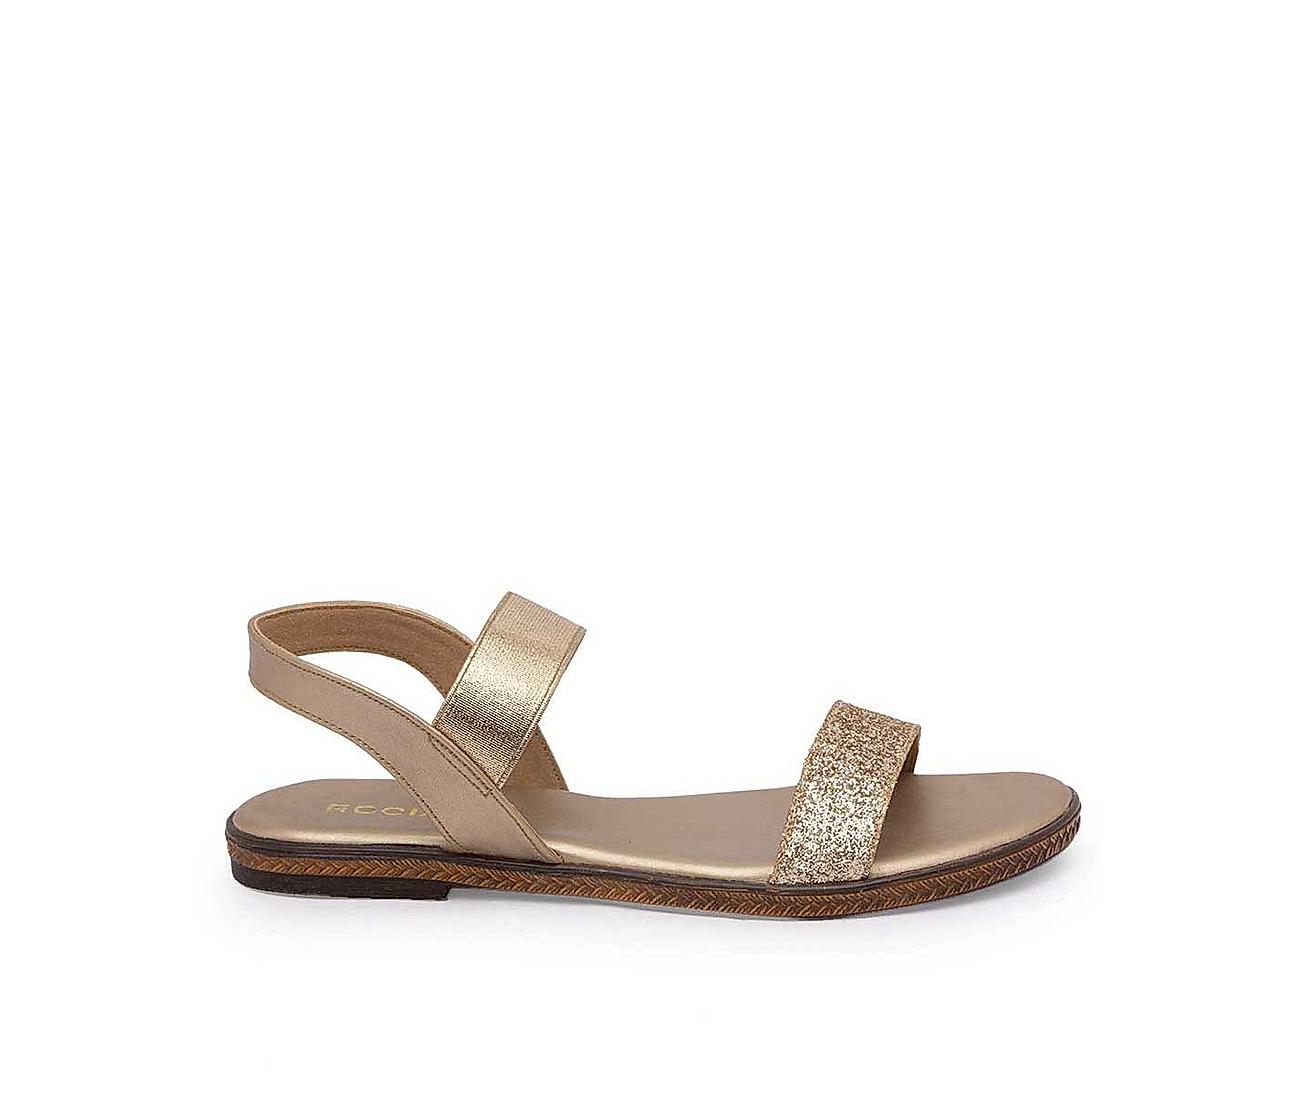 Buy Rocia Gold Women Open Toe Sandals Online at Regal Shoes |7583928